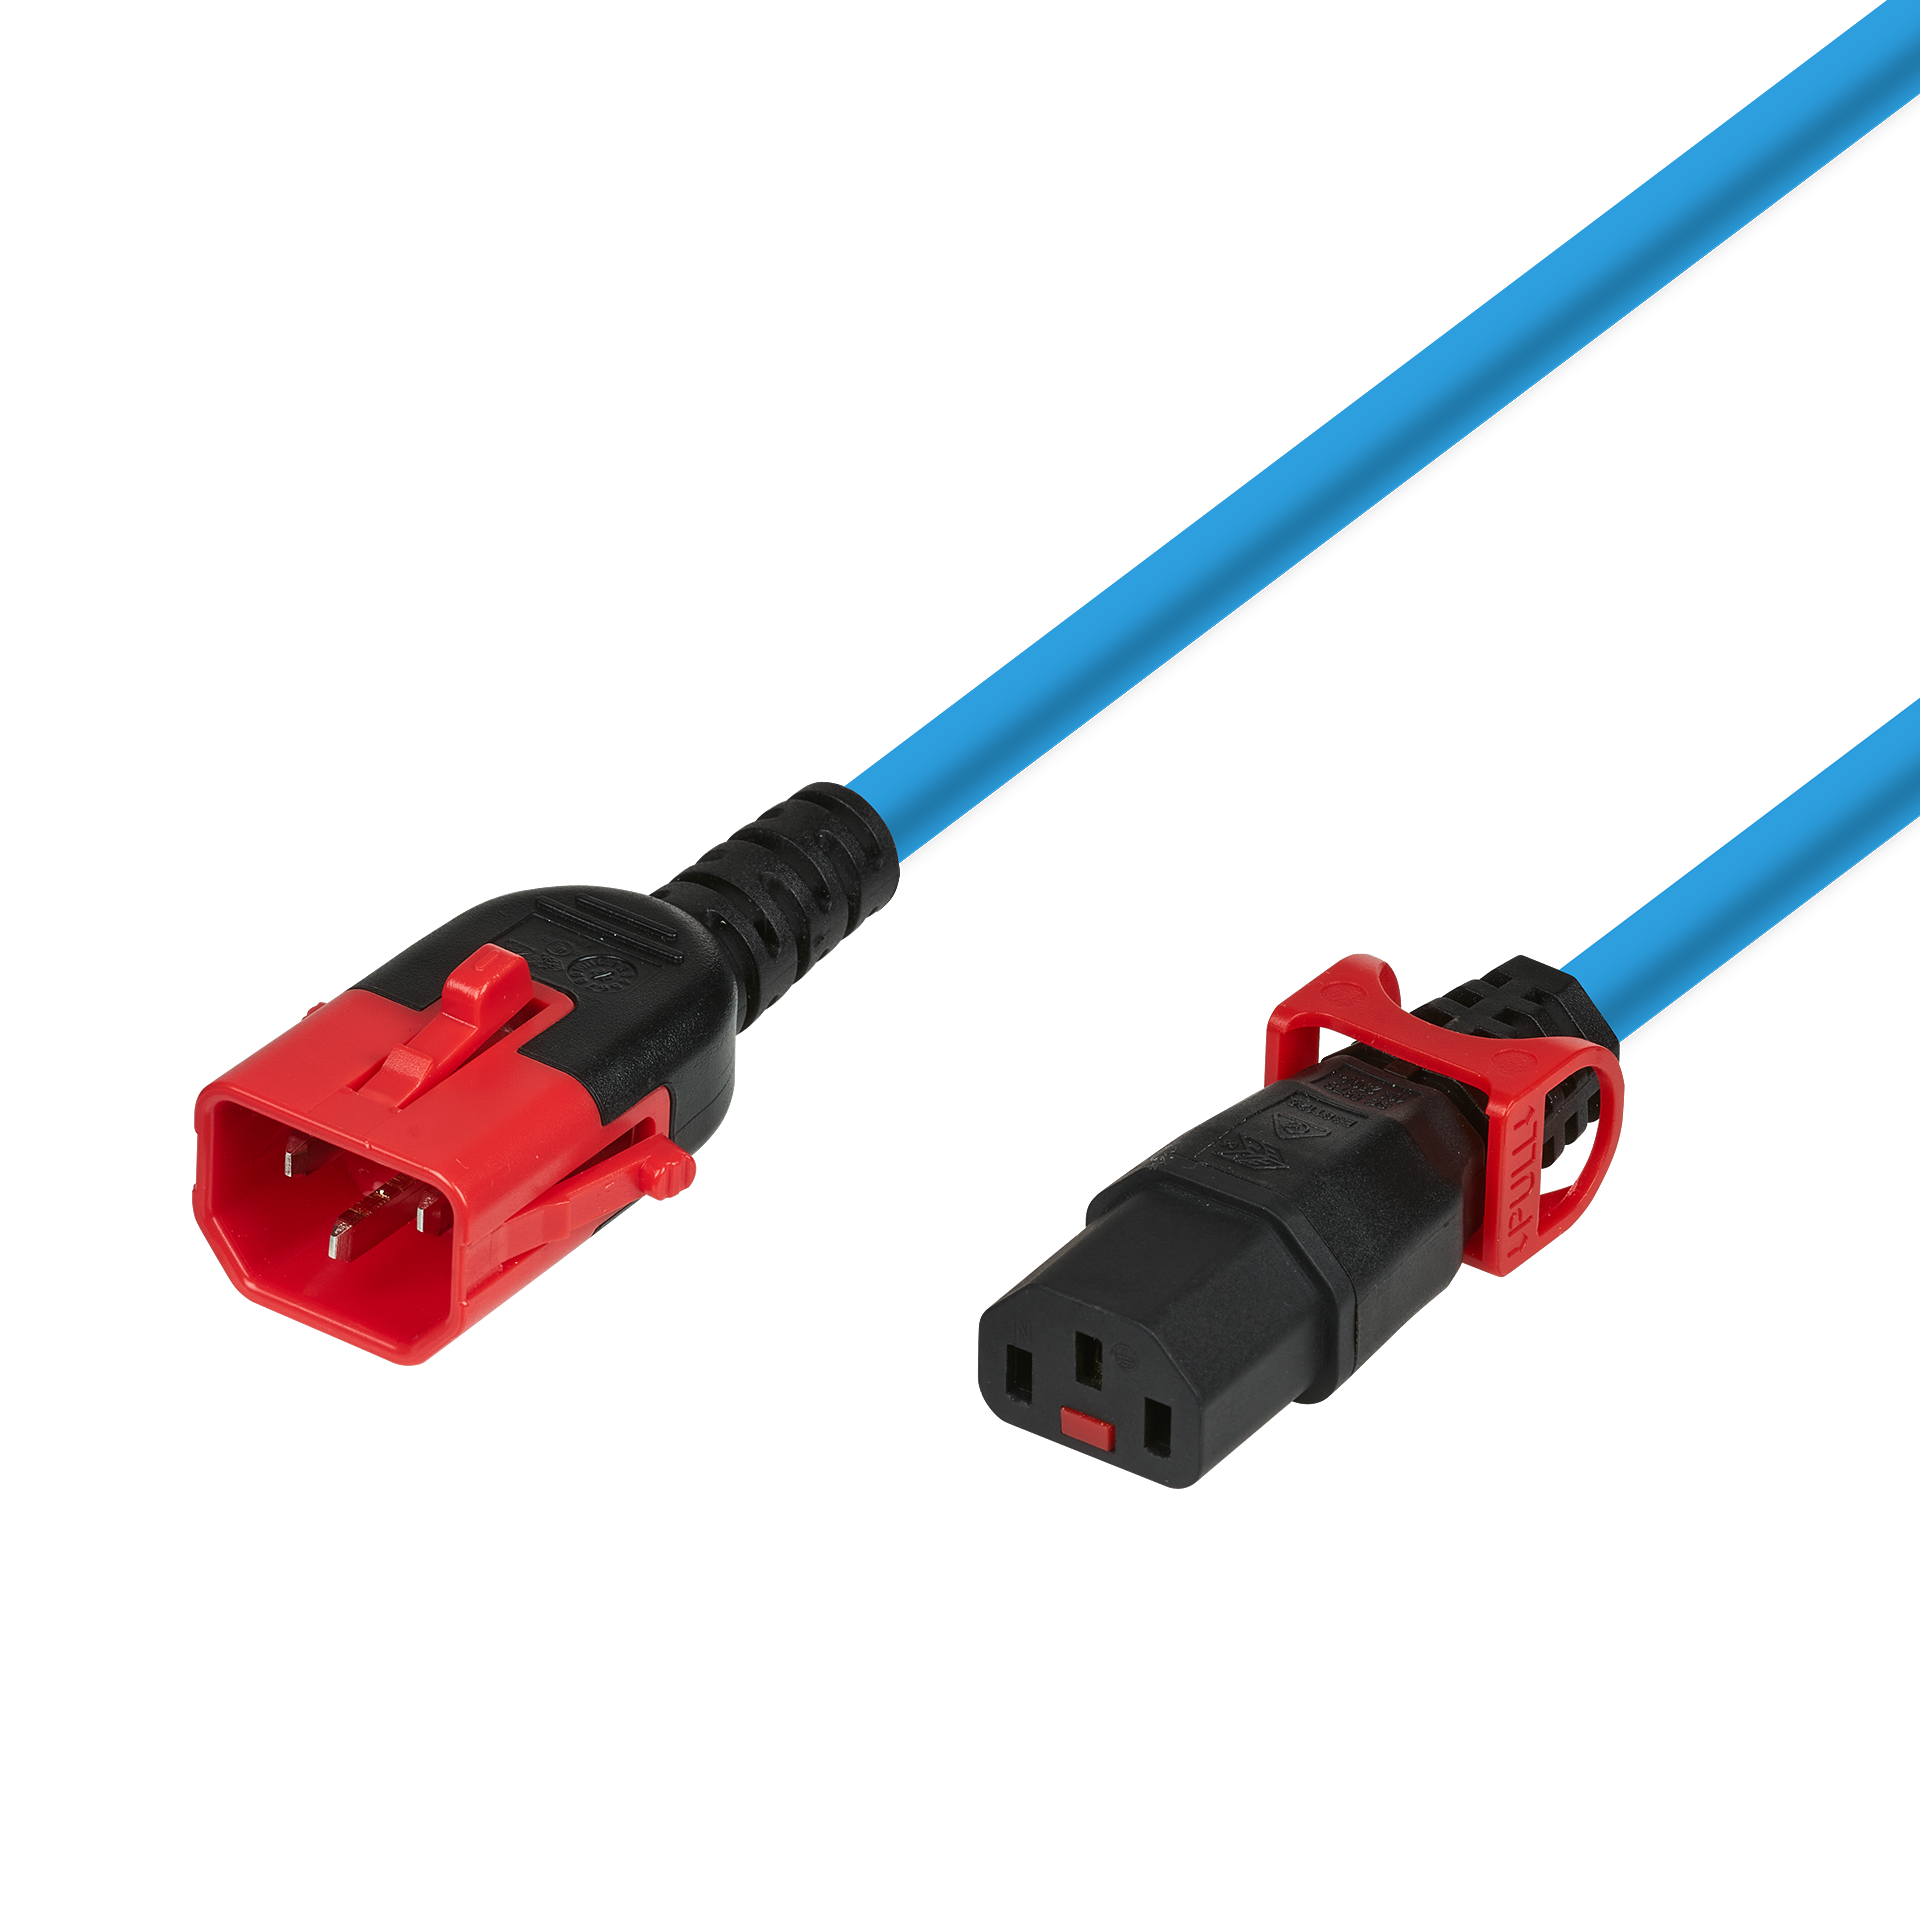 Extension Cable C14 - C13, Blue, Dual Lock, 2 m